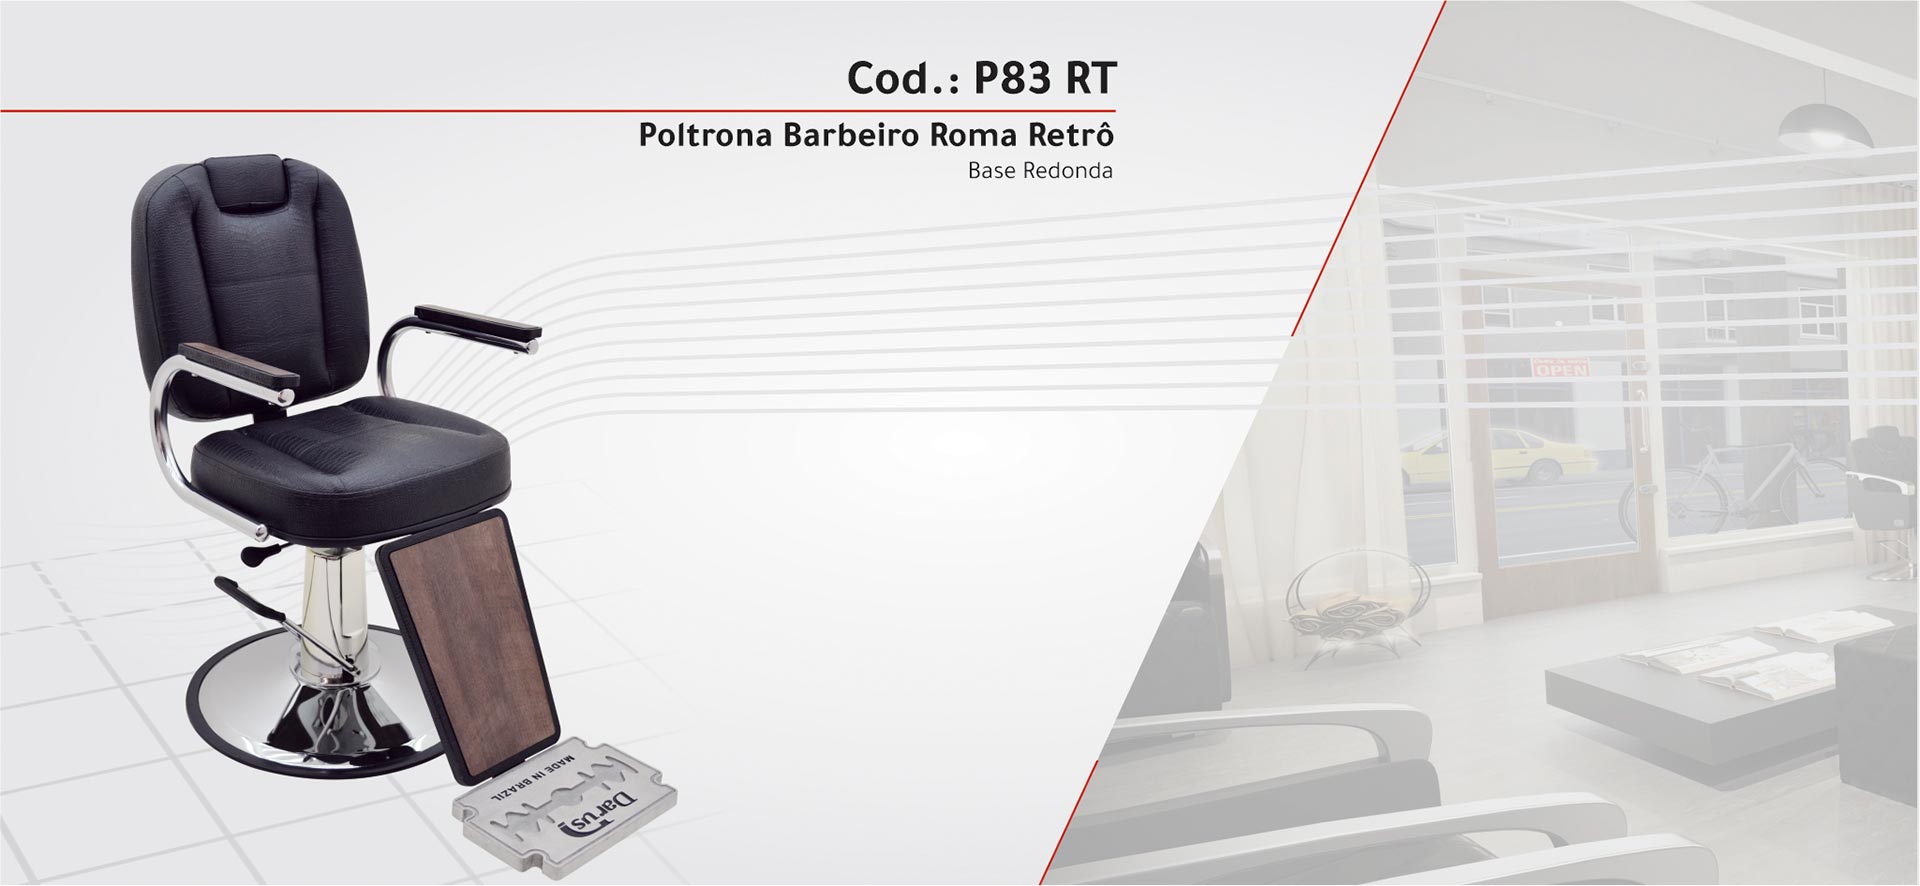 P83 - RT - Poltrona Barbeiro Roma Retrô